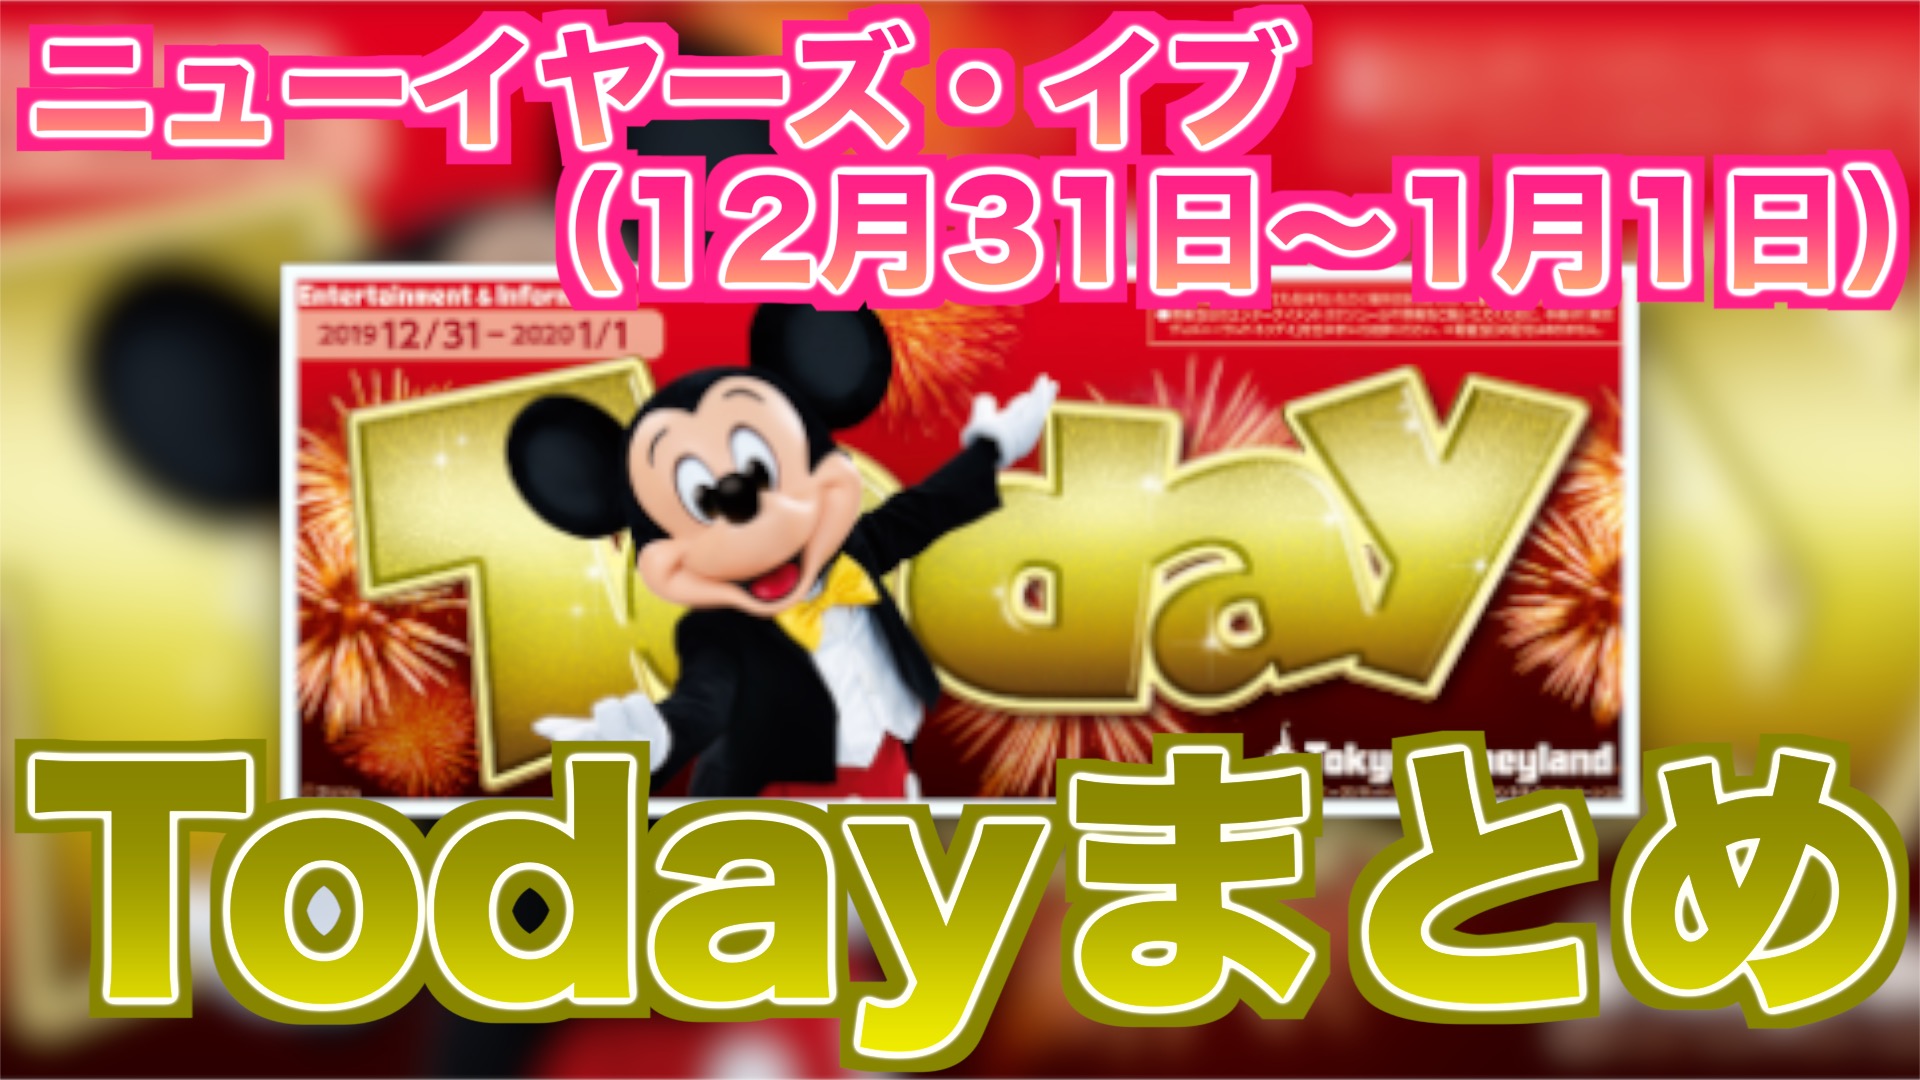 Today ニューイヤーズ イブ 12月31日 1月1日 のtodayまとめ 東京ディズニーランド編 Disney Play Time